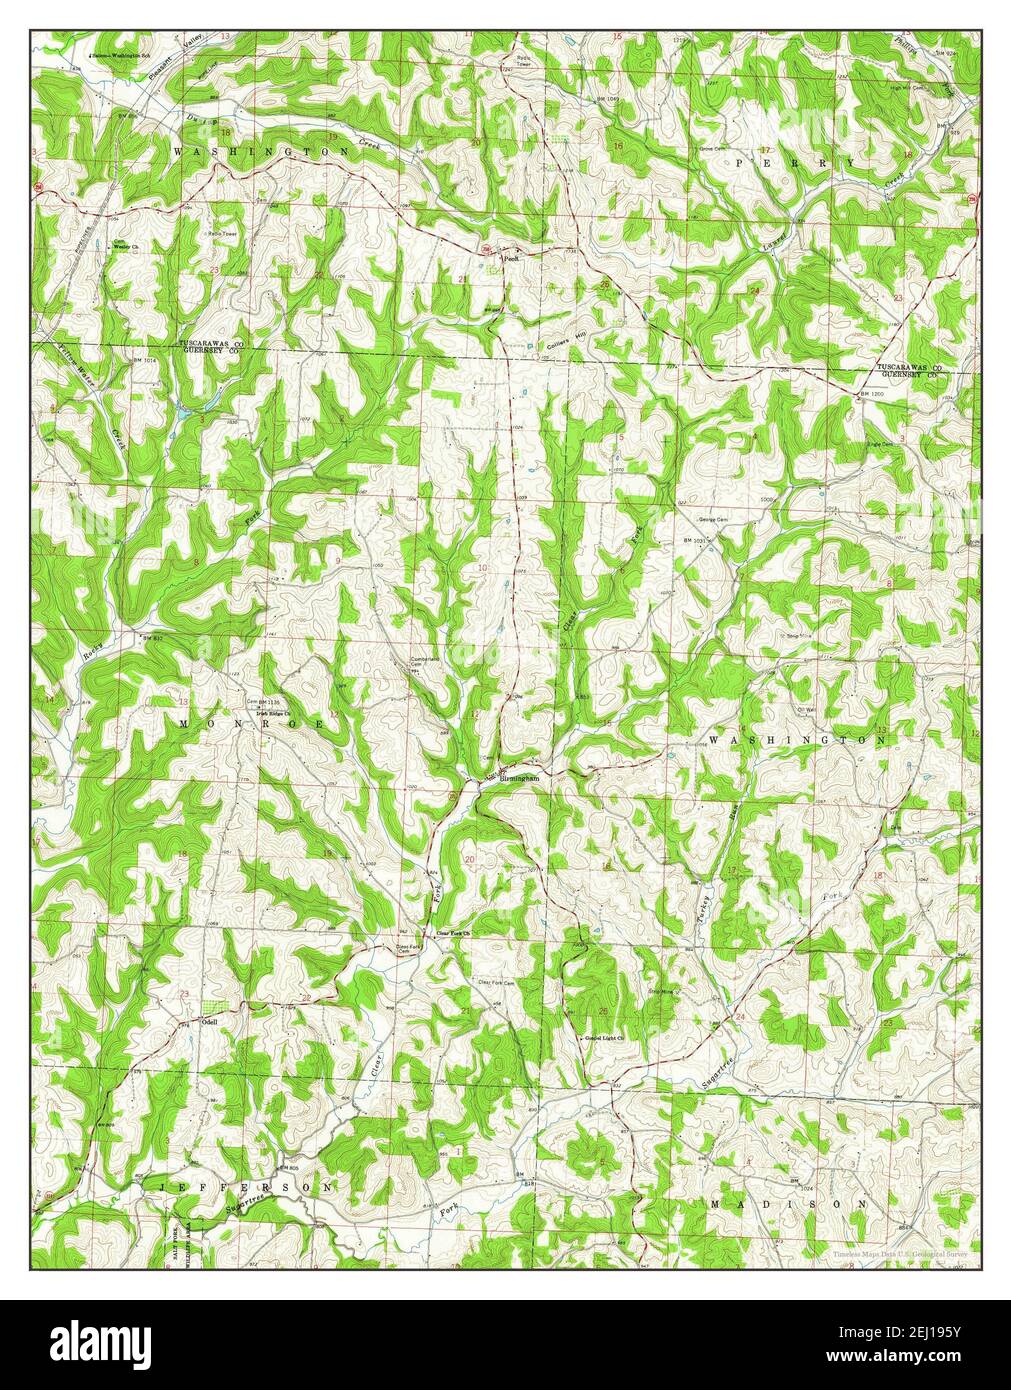 Birmingham Ohio Map 1963 124000 United States Of America By Timeless Maps Data Us Geological Survey 2EJ195Y 